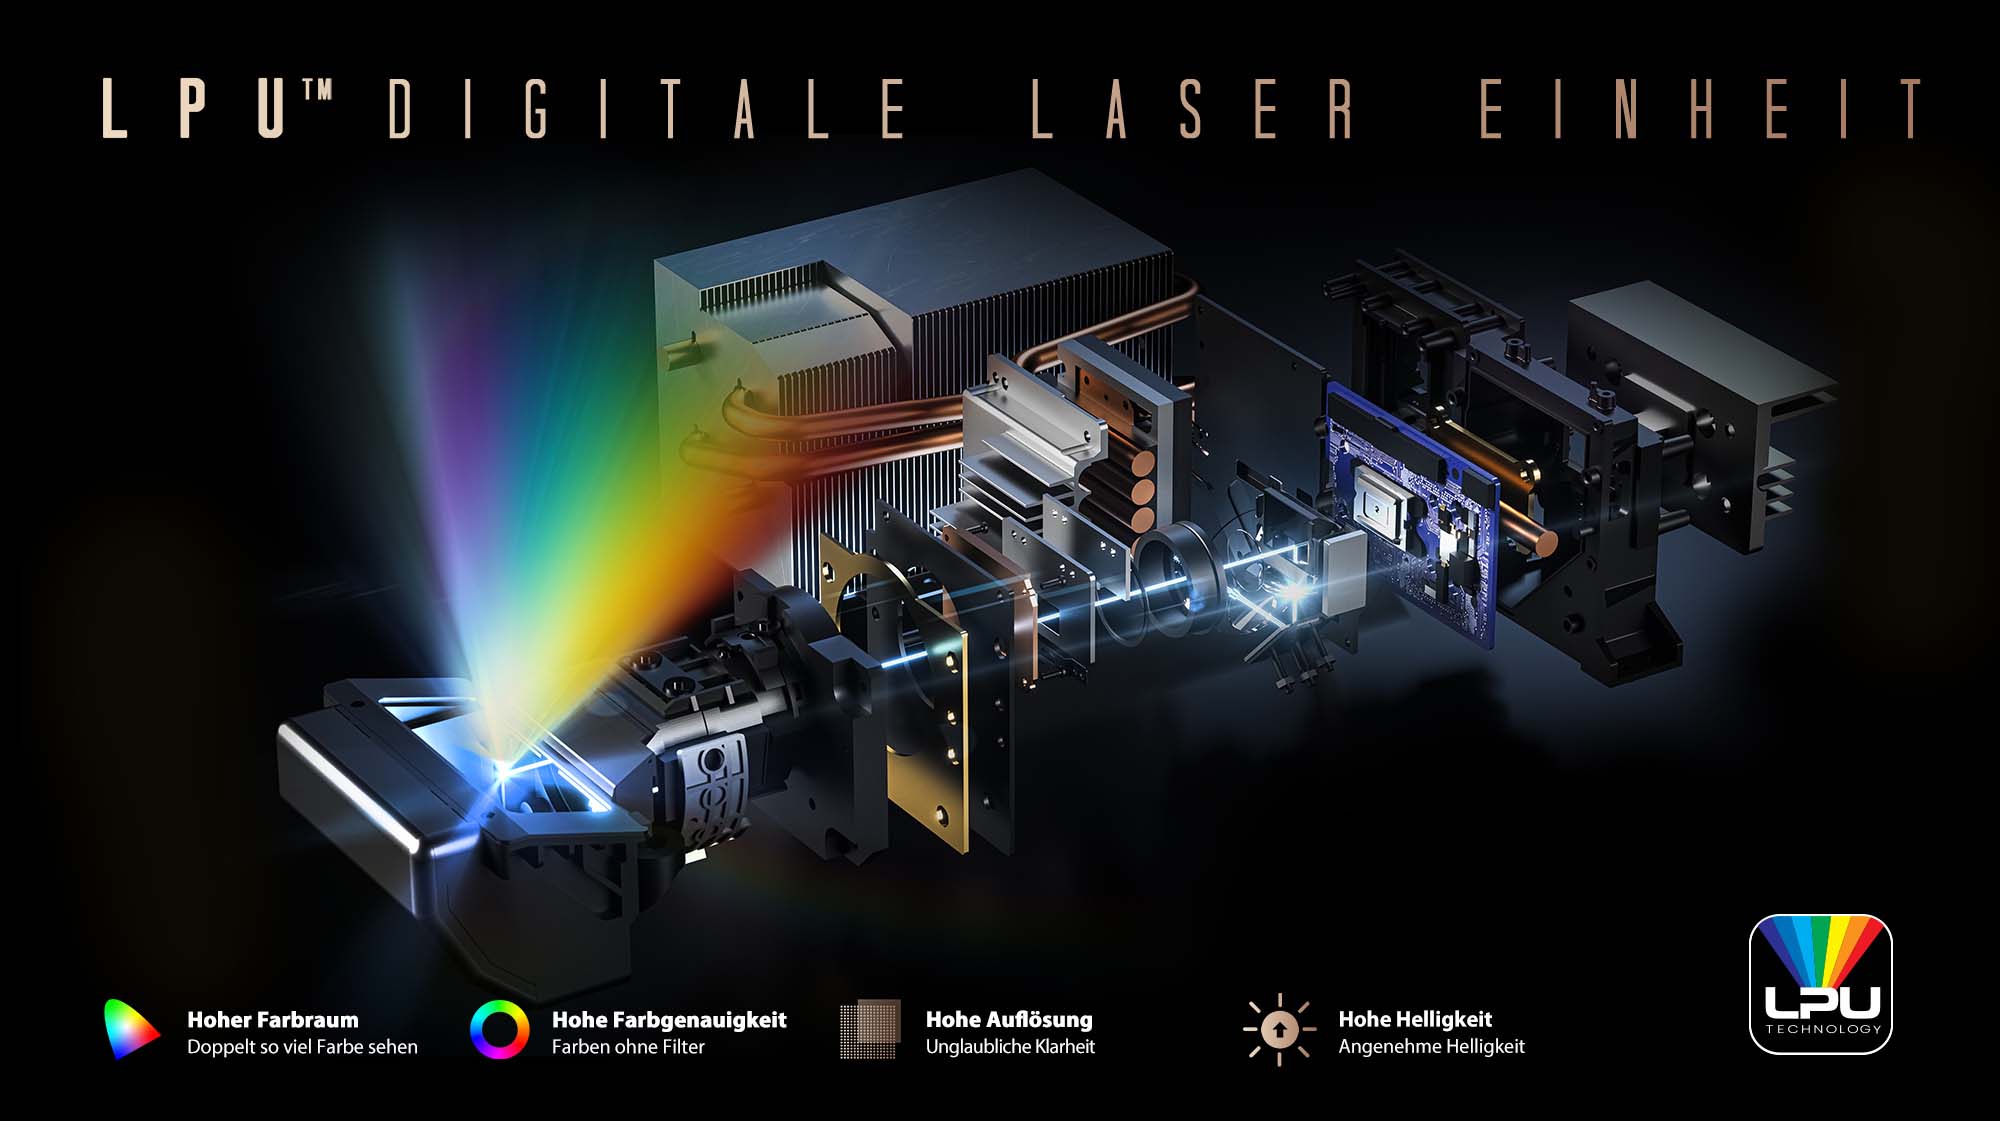 Hisense PX3 LPU Lasereinheit